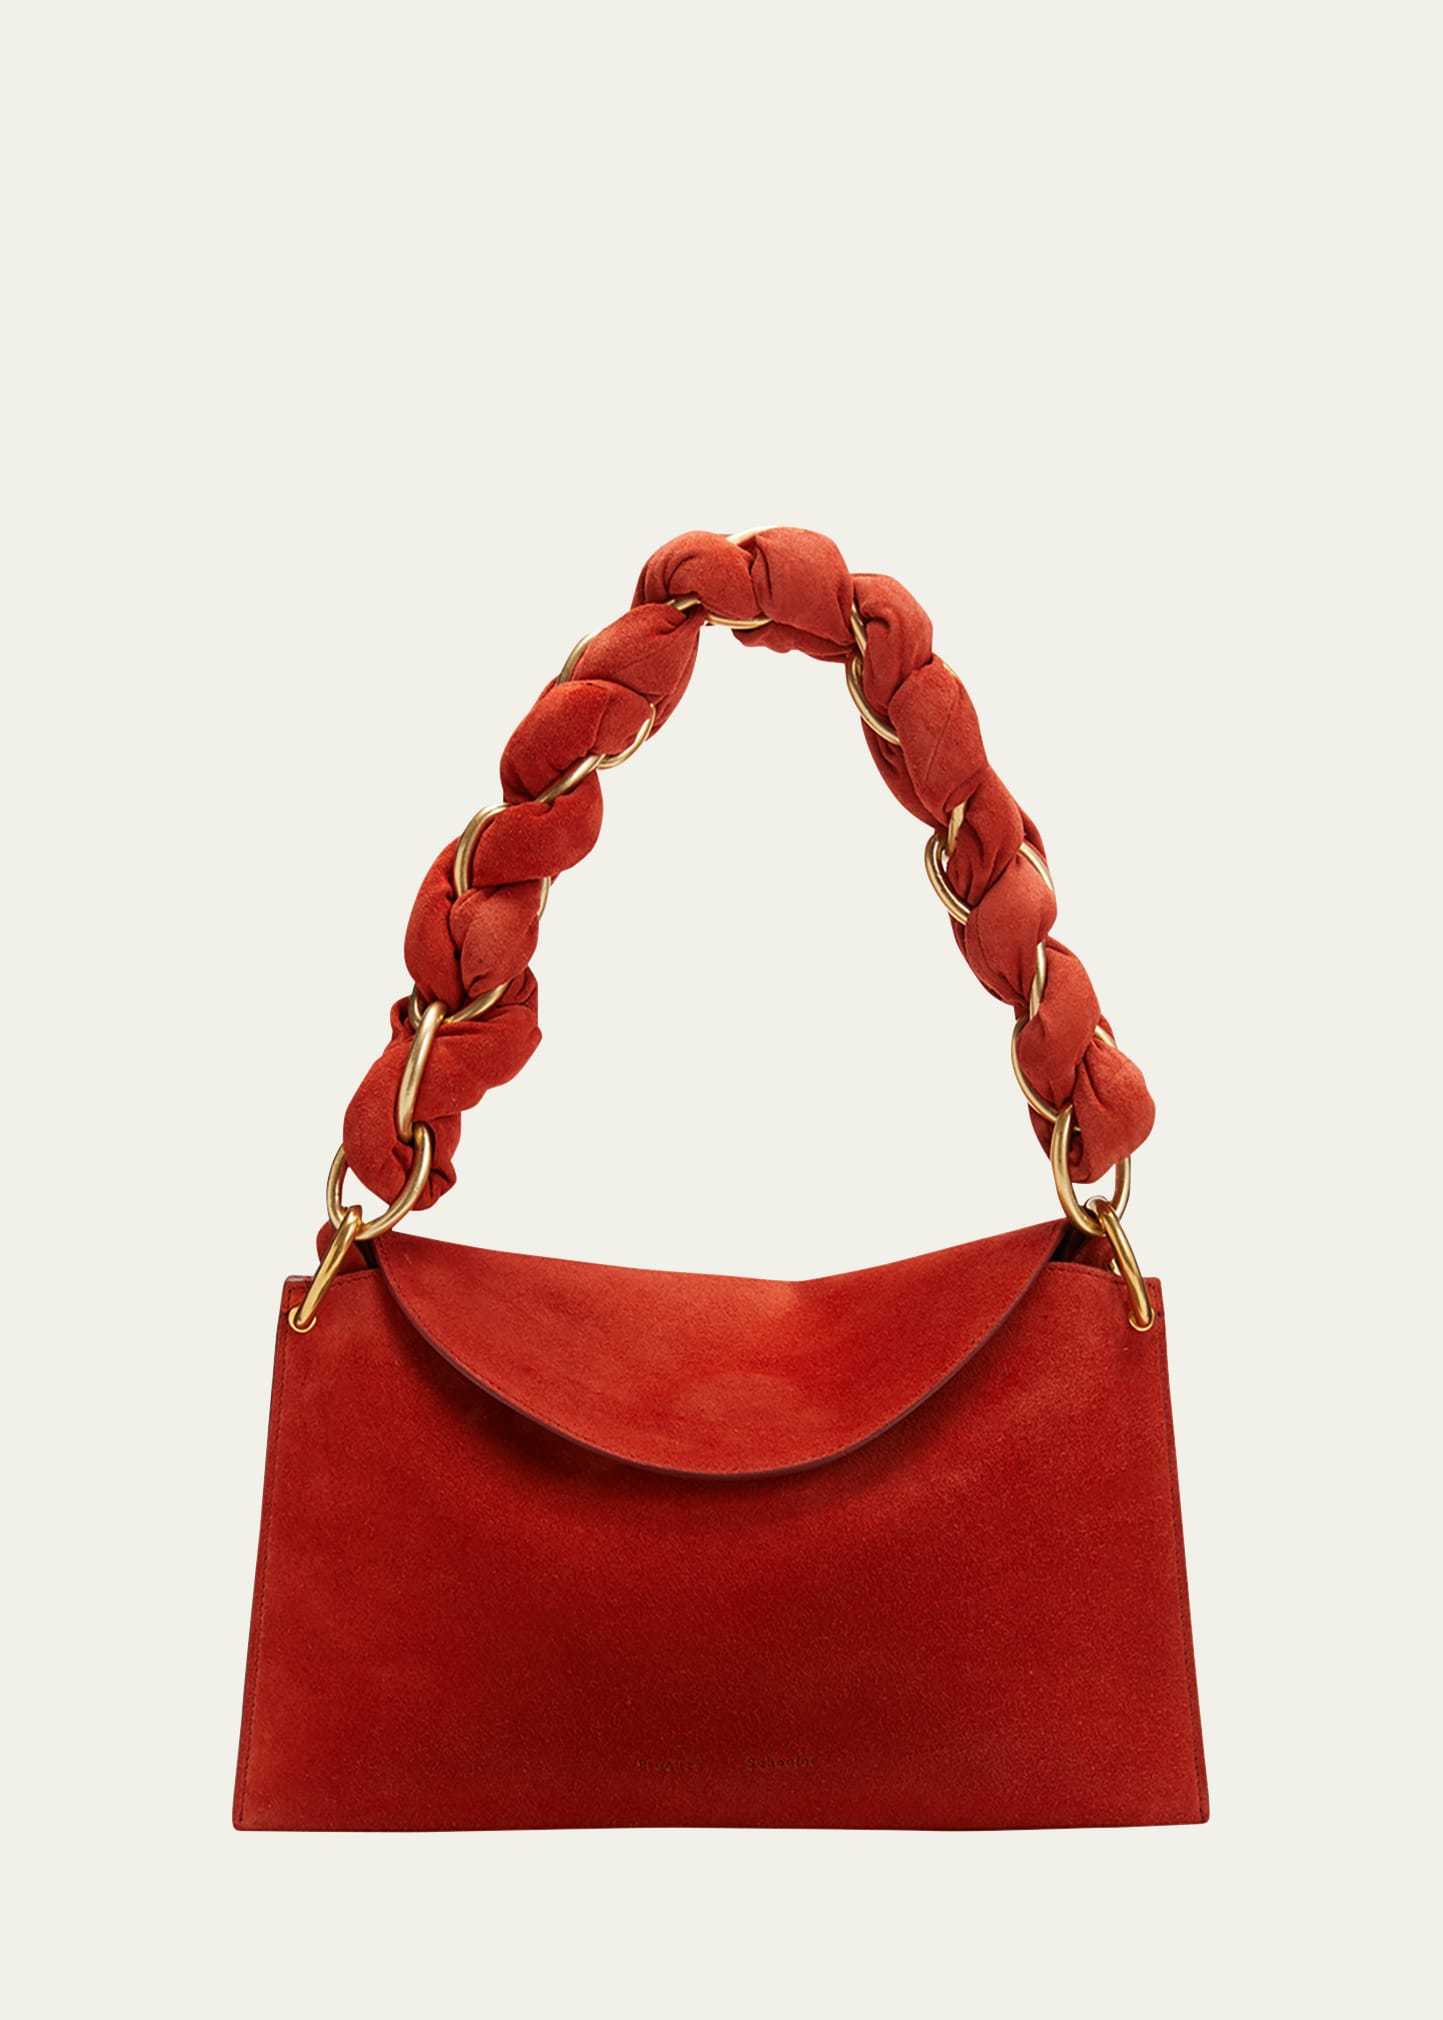 Women's Bags & Handbags for Sale - Shop Designer Handbags 